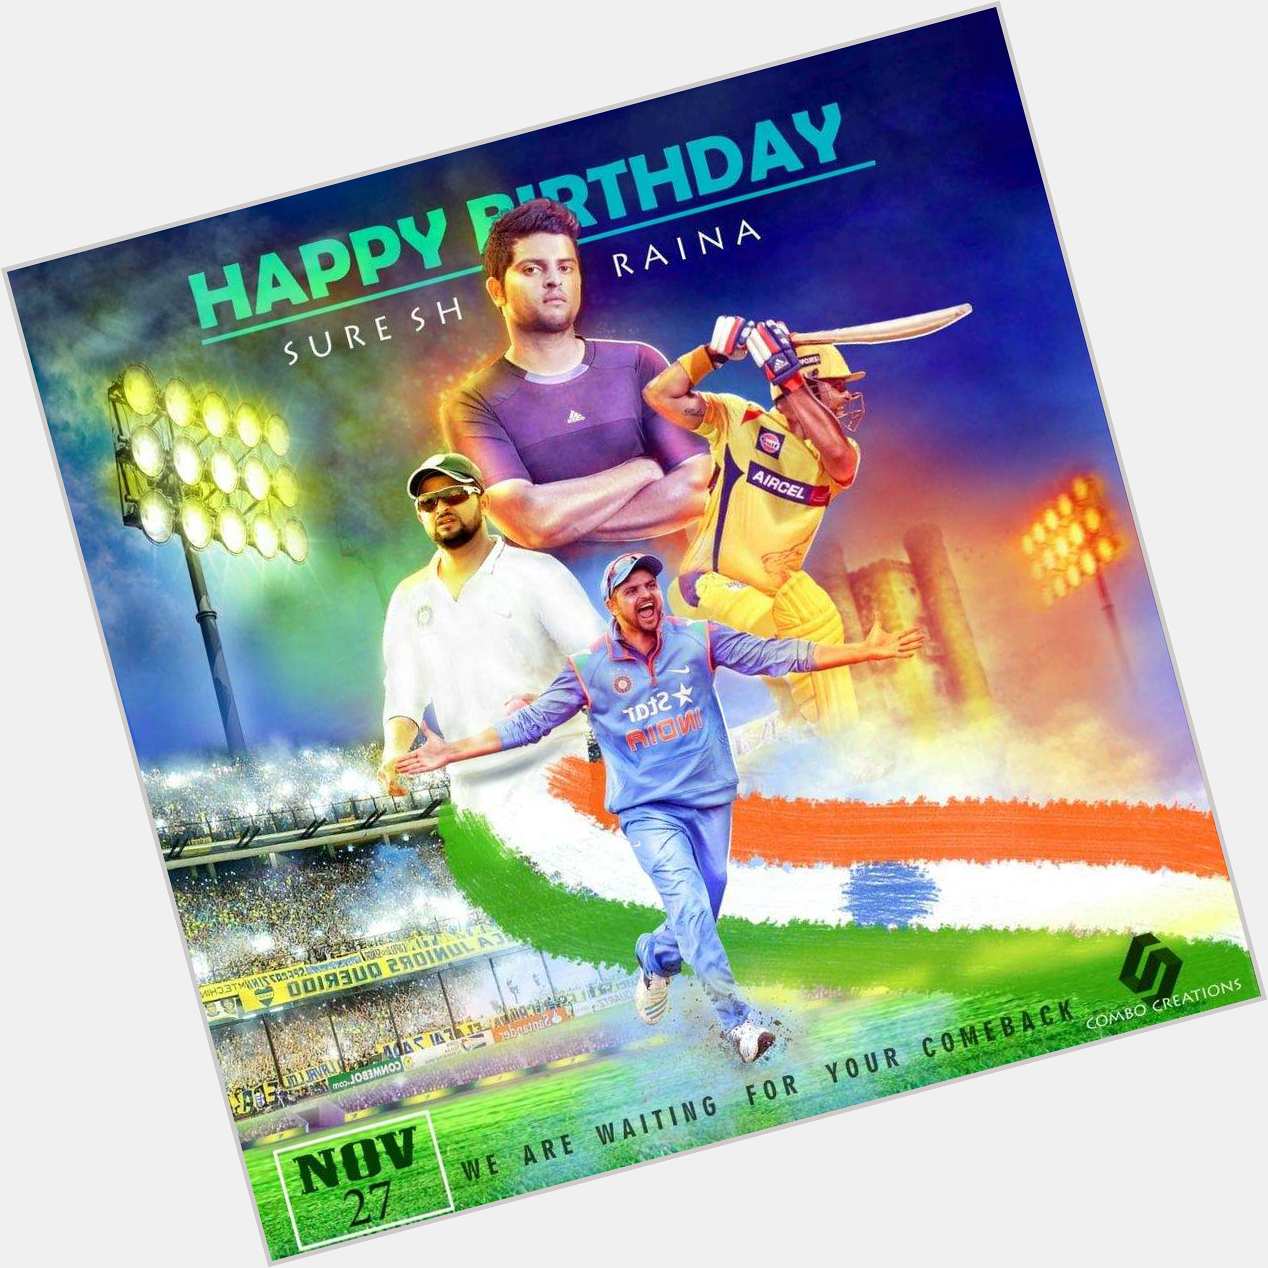 Happy birthday Suresh raina a comeback player for Indian team.... 